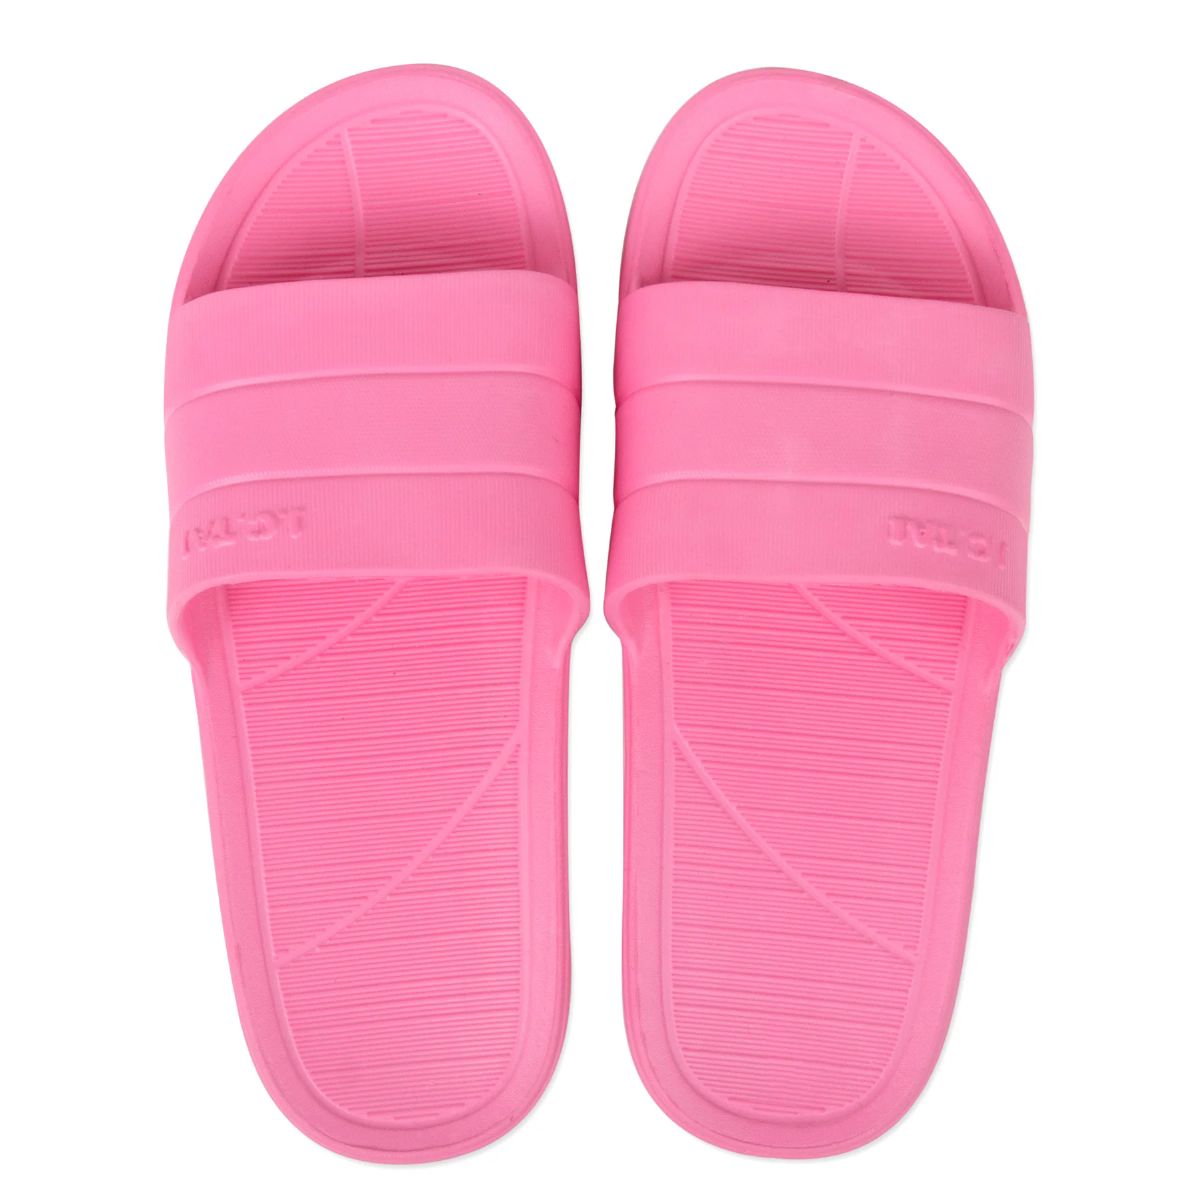 Wholesale Footwear Women's Pink Slide Sandals